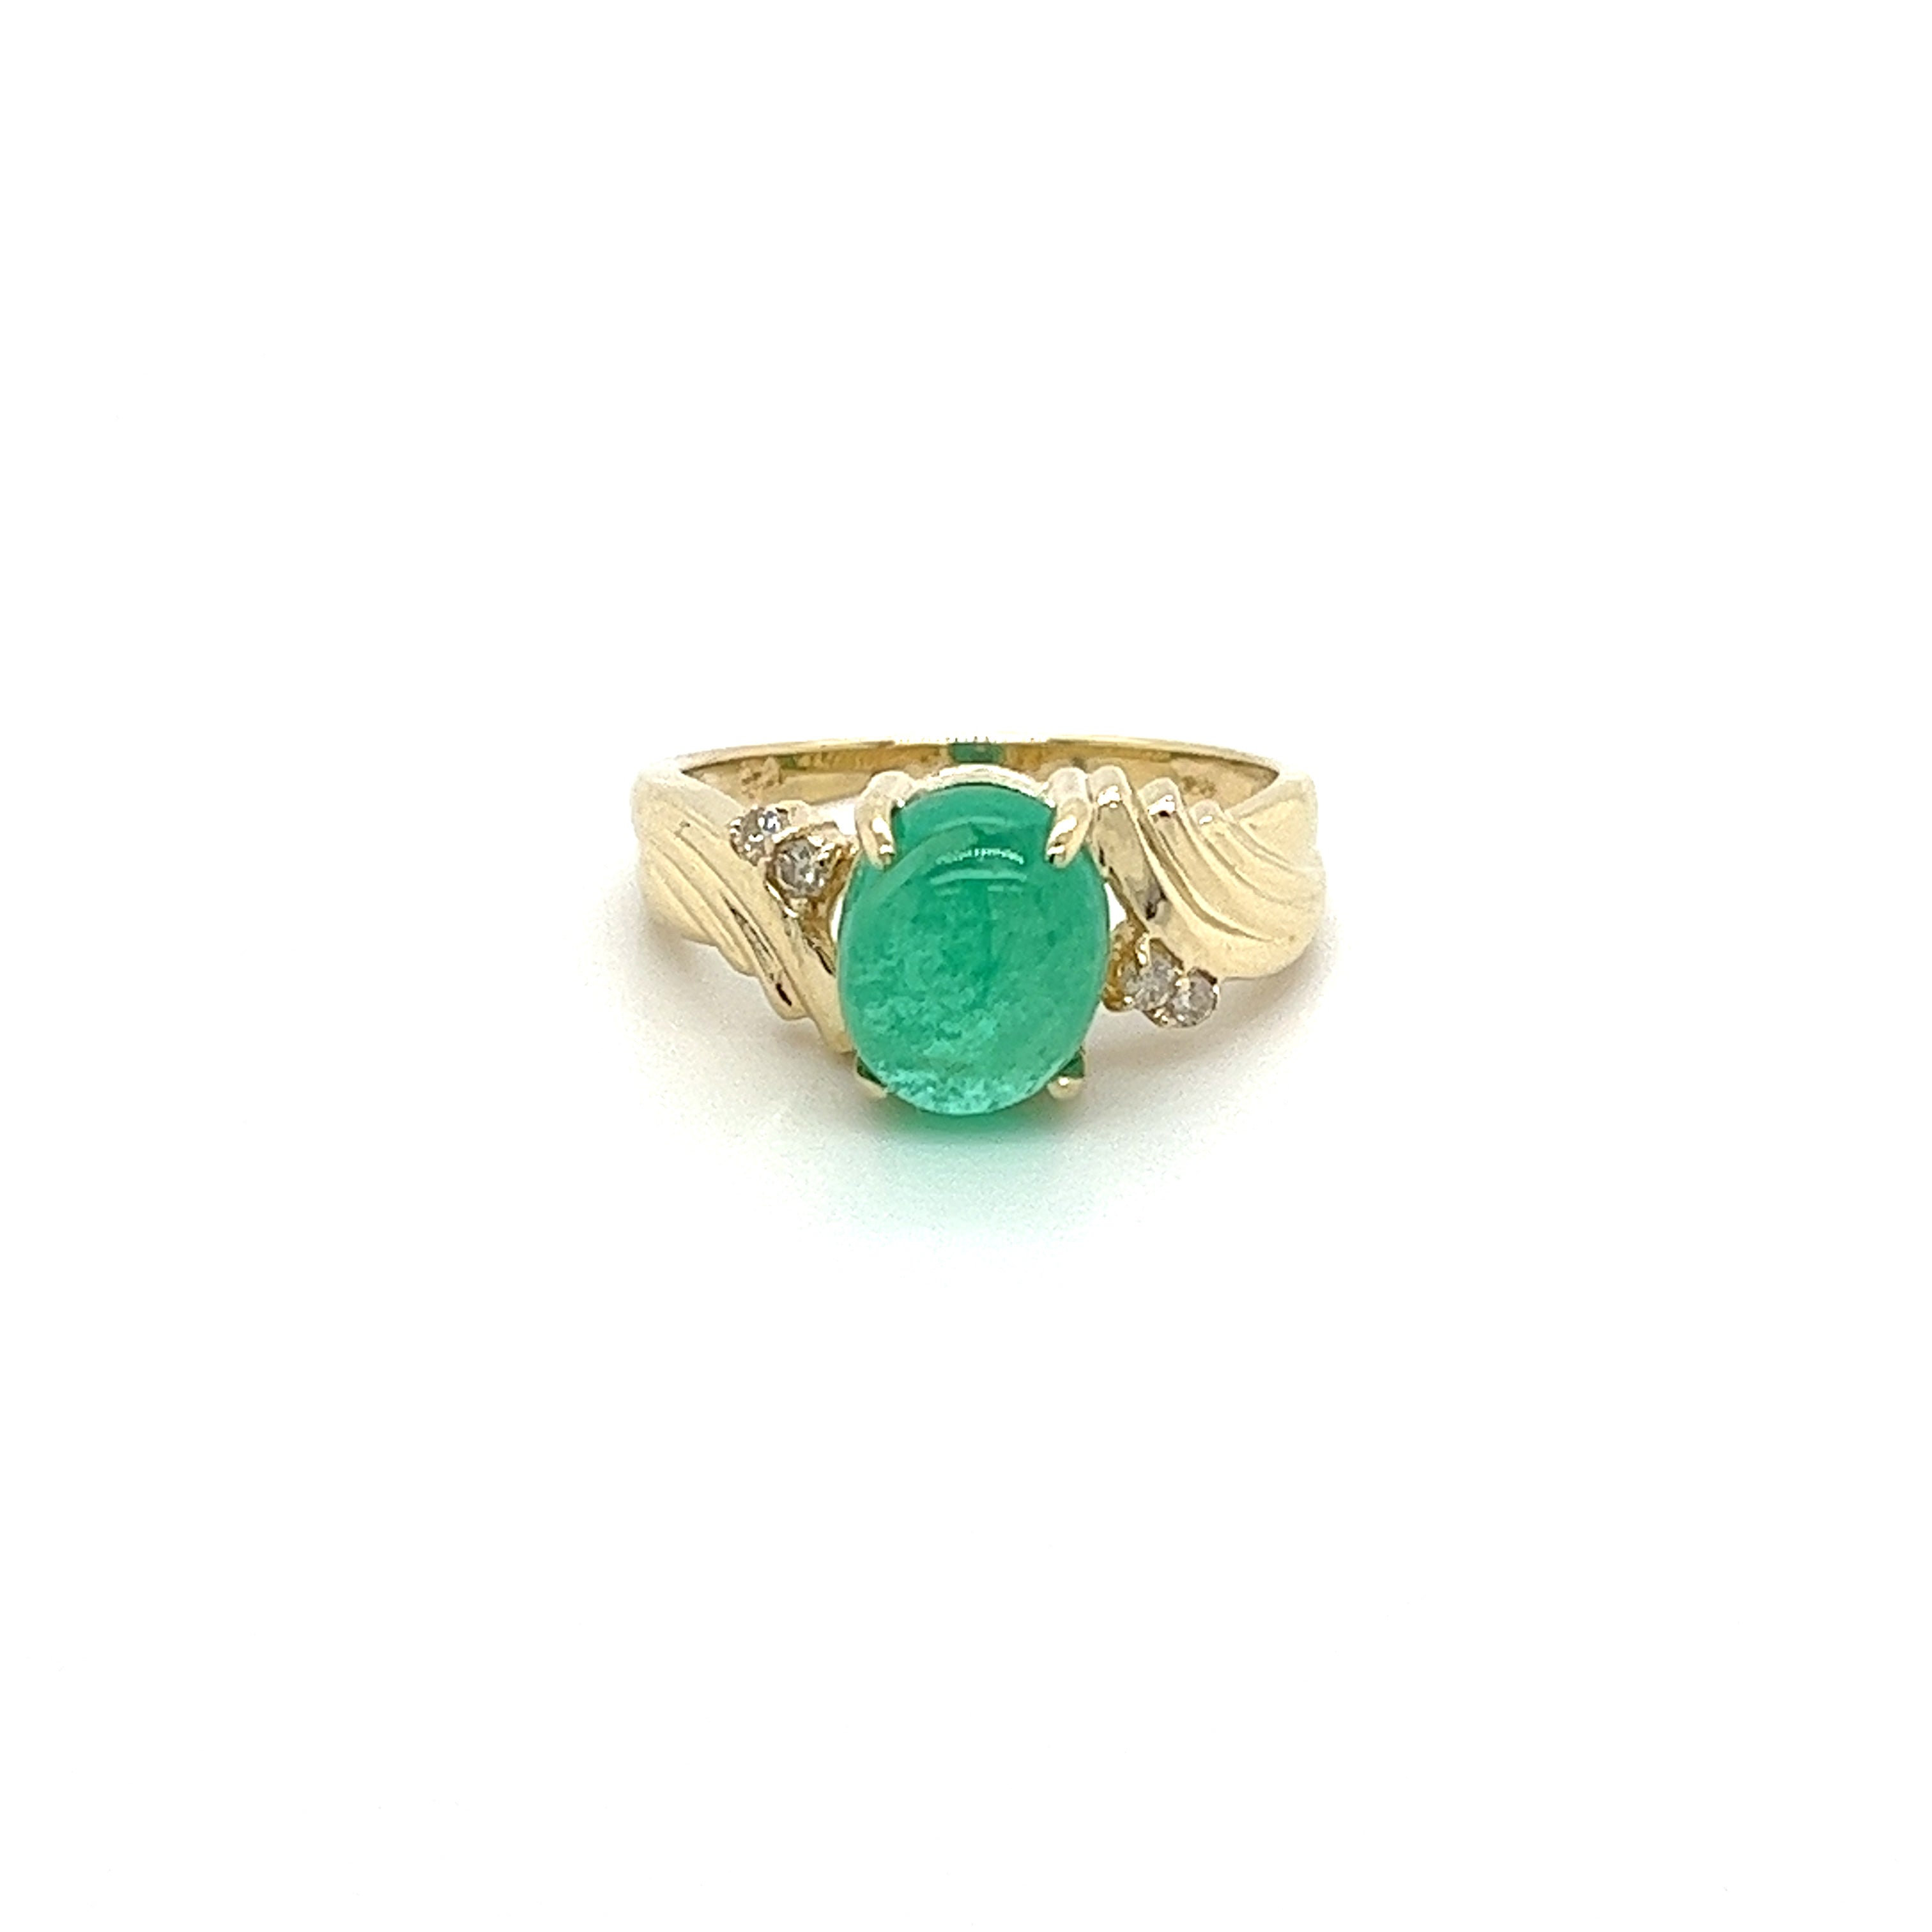 2-Carat-Cabochon-Cut-Natural-Emerald-Diamond-in-Textured-14K-Yellow-Gold-Ring-Rings.jpg